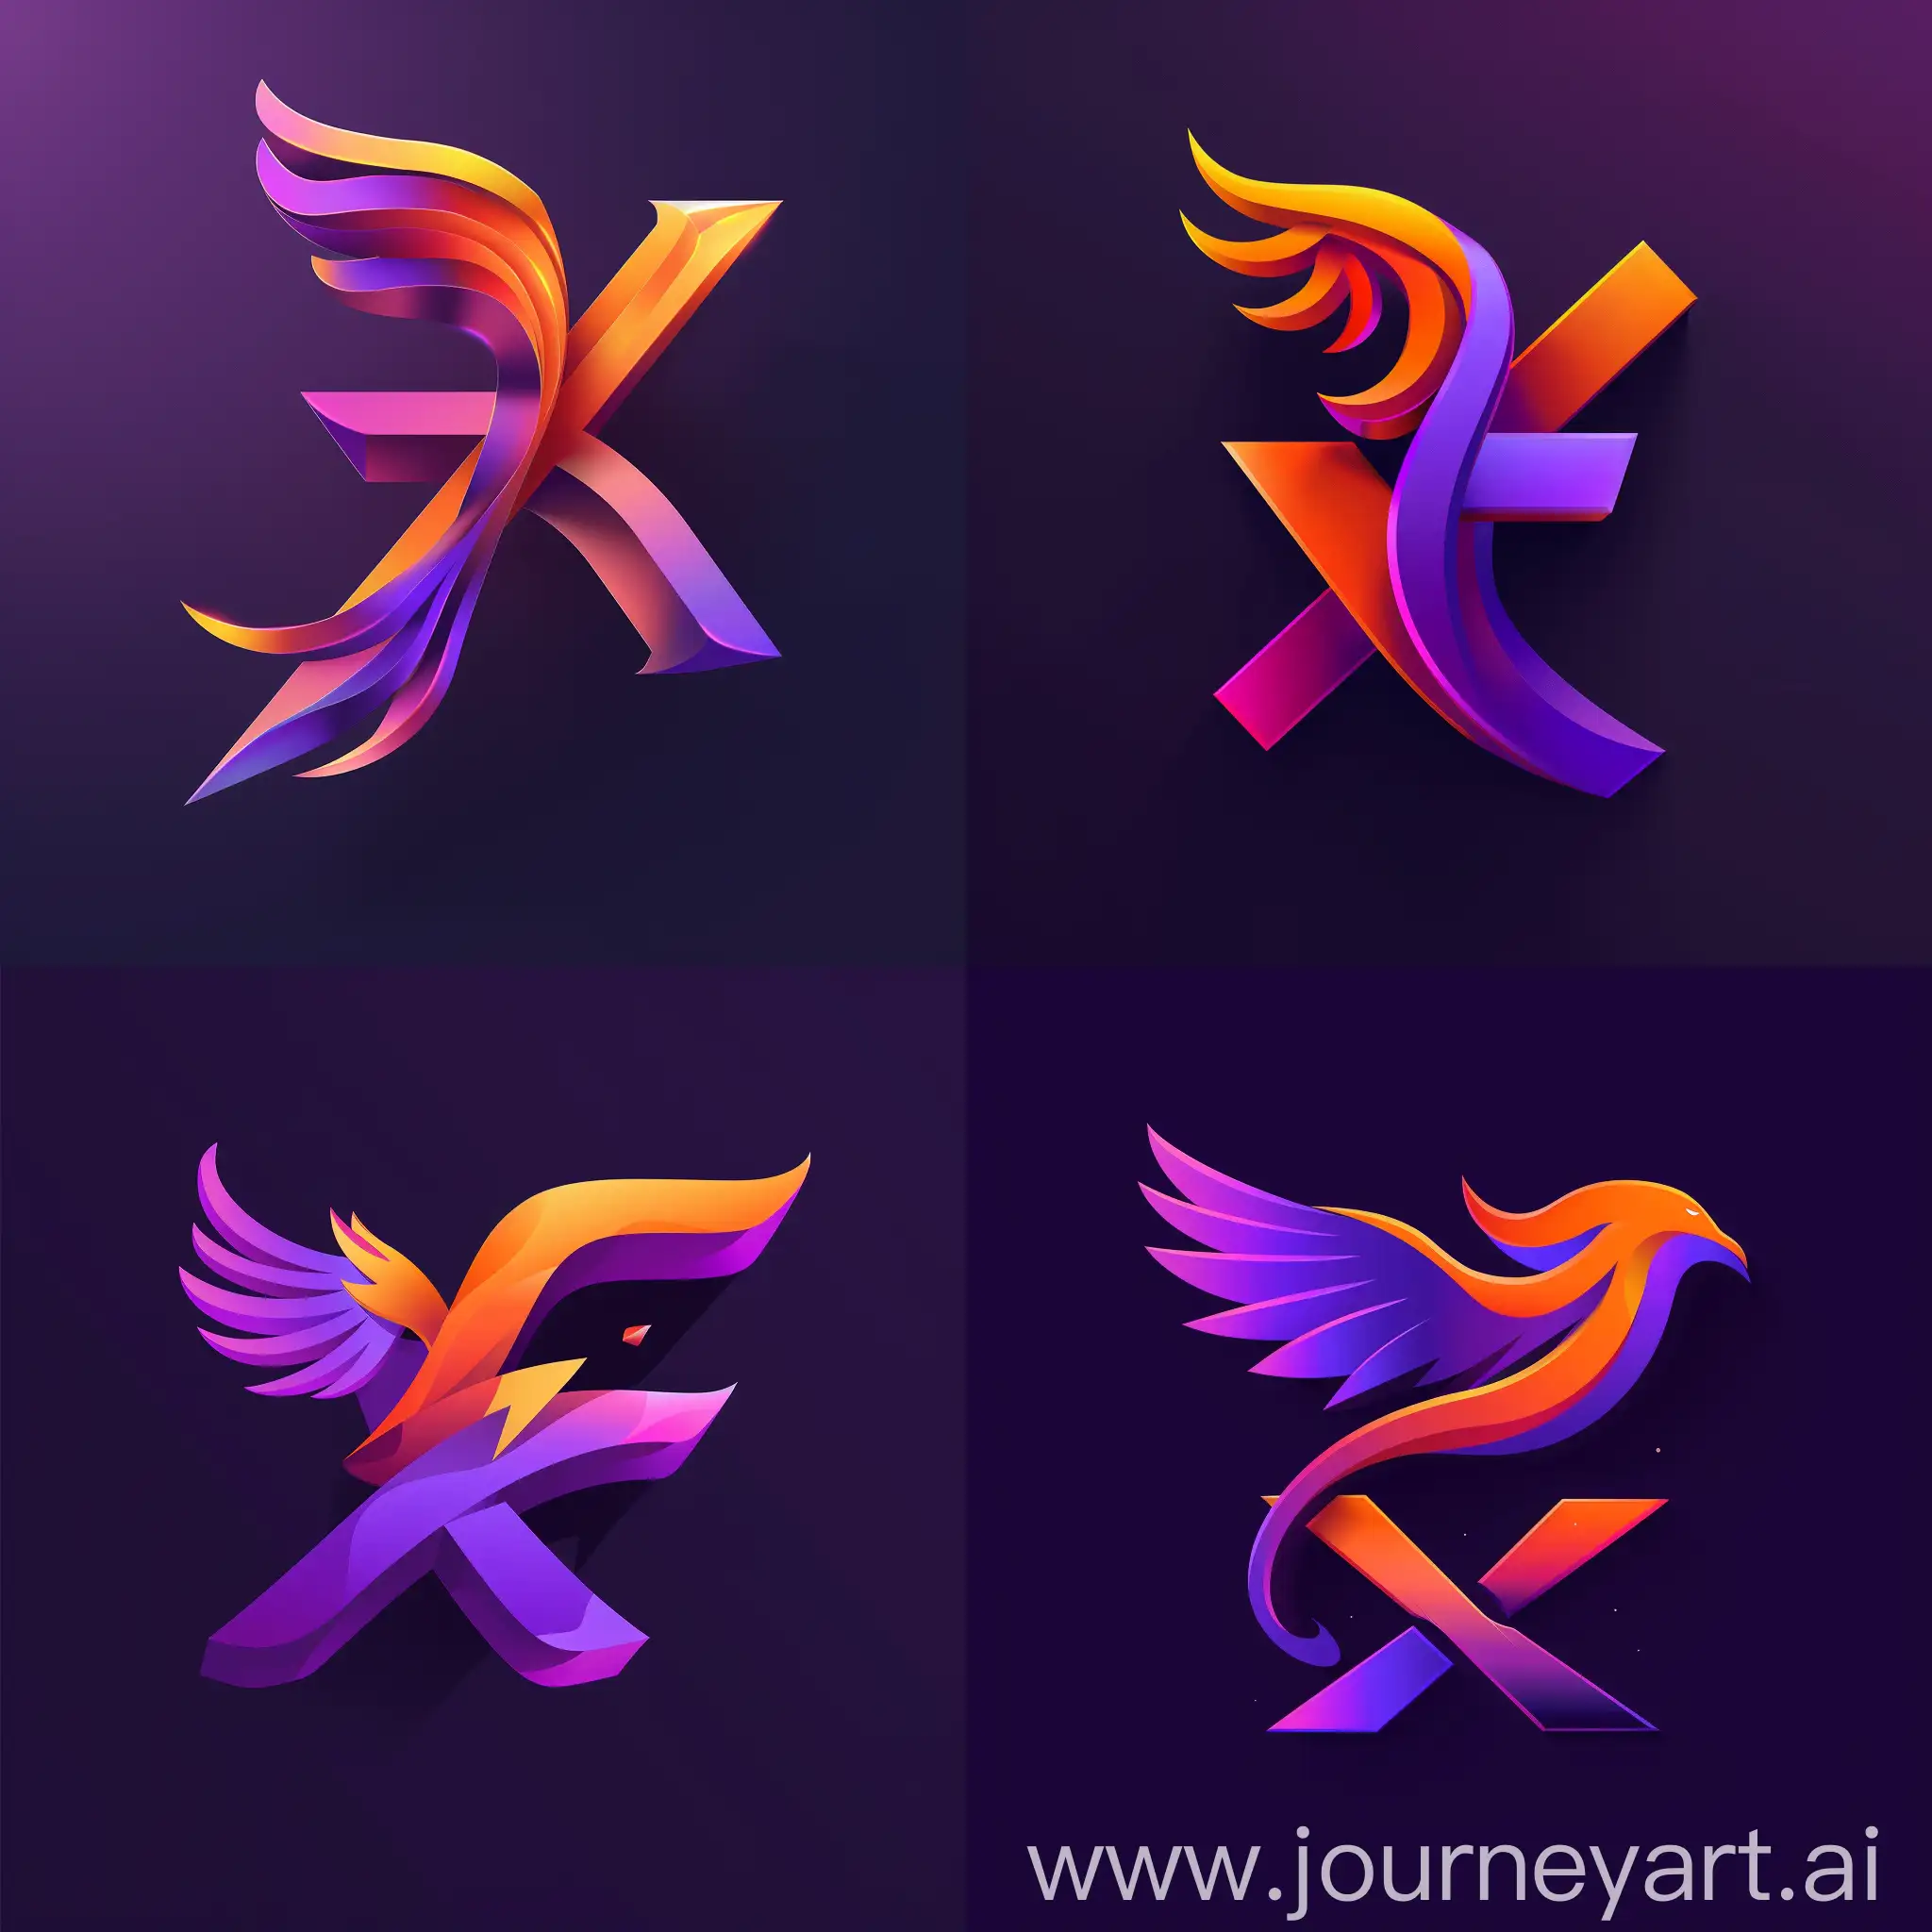 Positive-Phoenix-Transformation-with-Purple-and-Orange-Colors